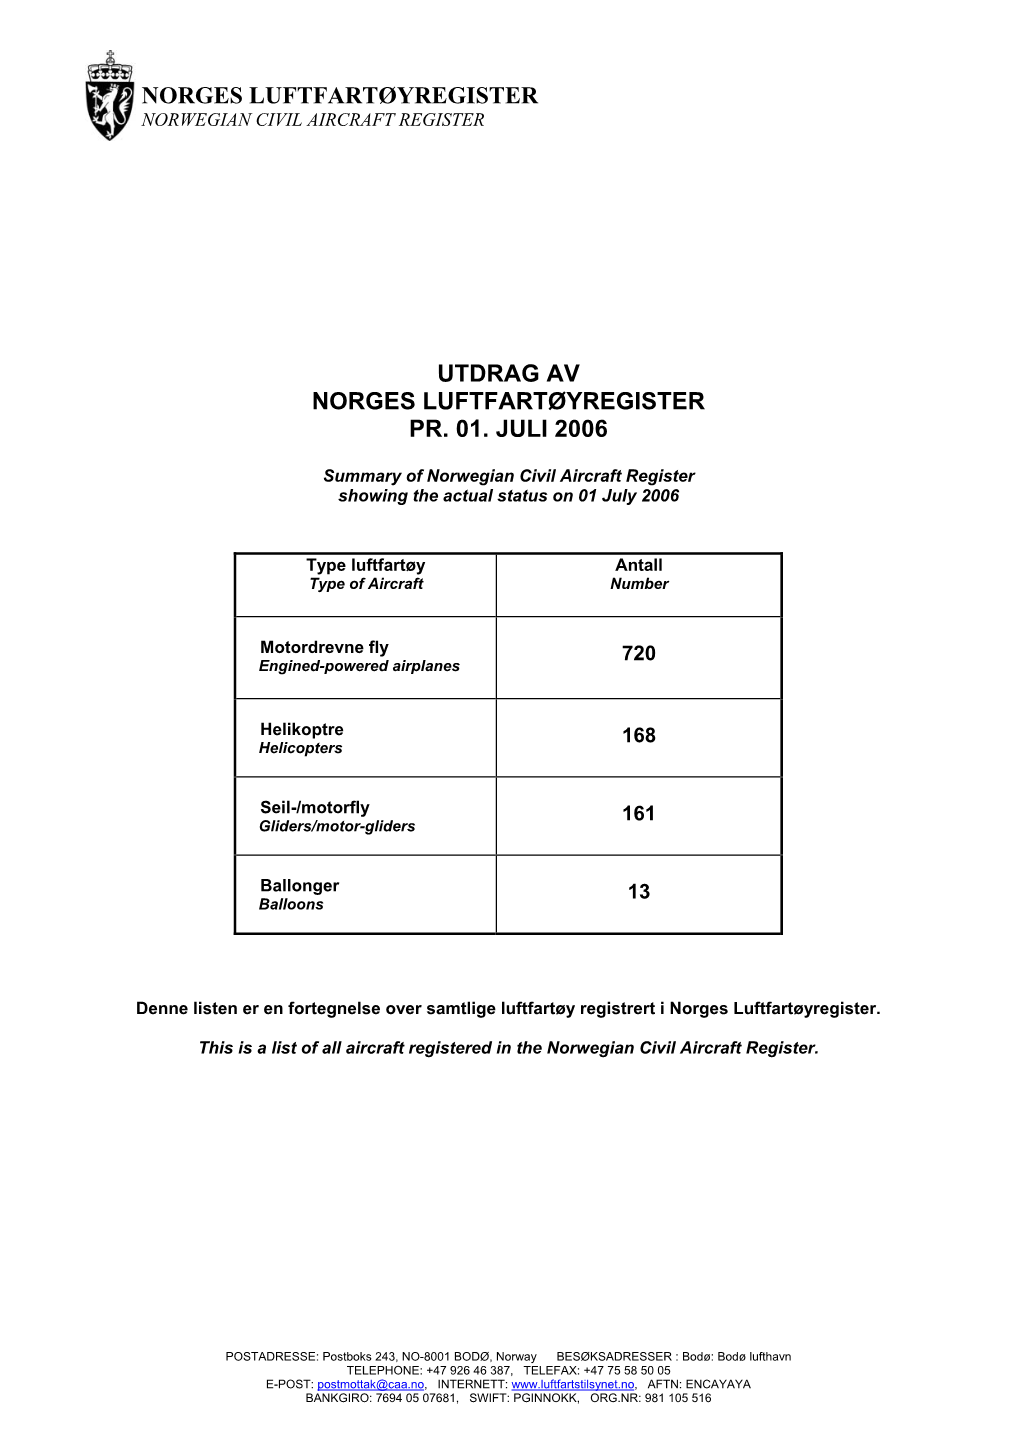 Norges Luftfartøyregister Norwegian Civil Aircraft Register